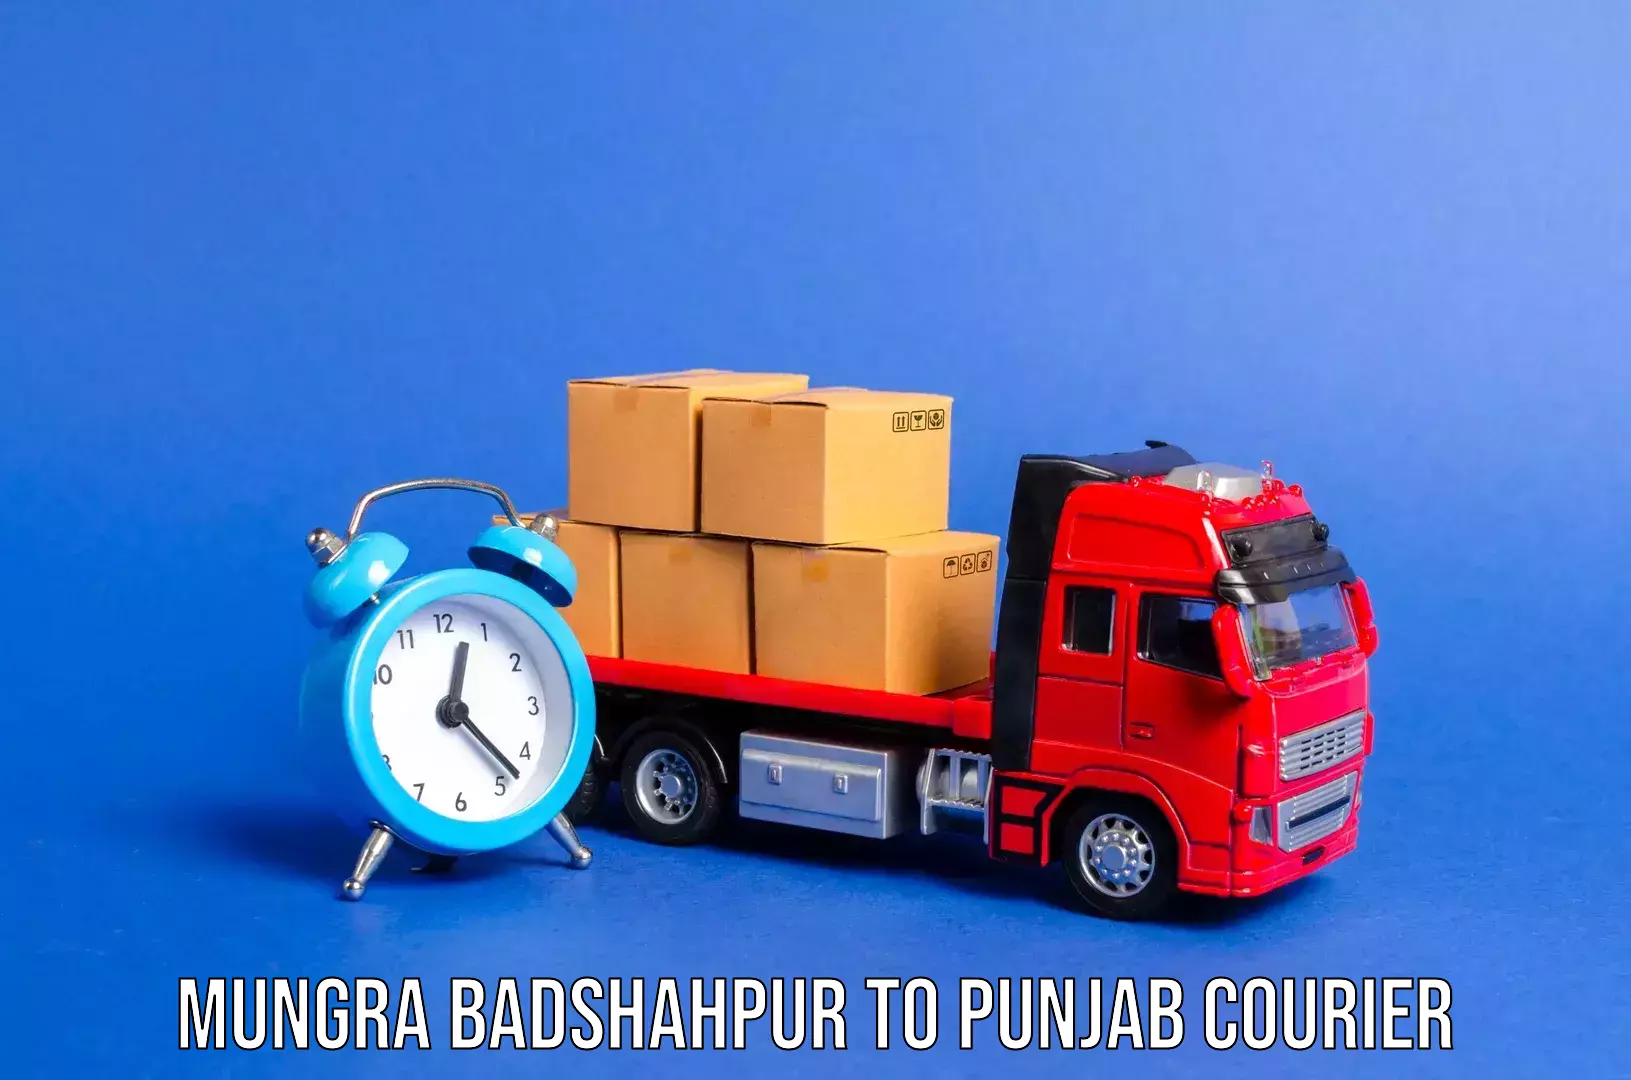 Luggage delivery providers Mungra Badshahpur to Punjab